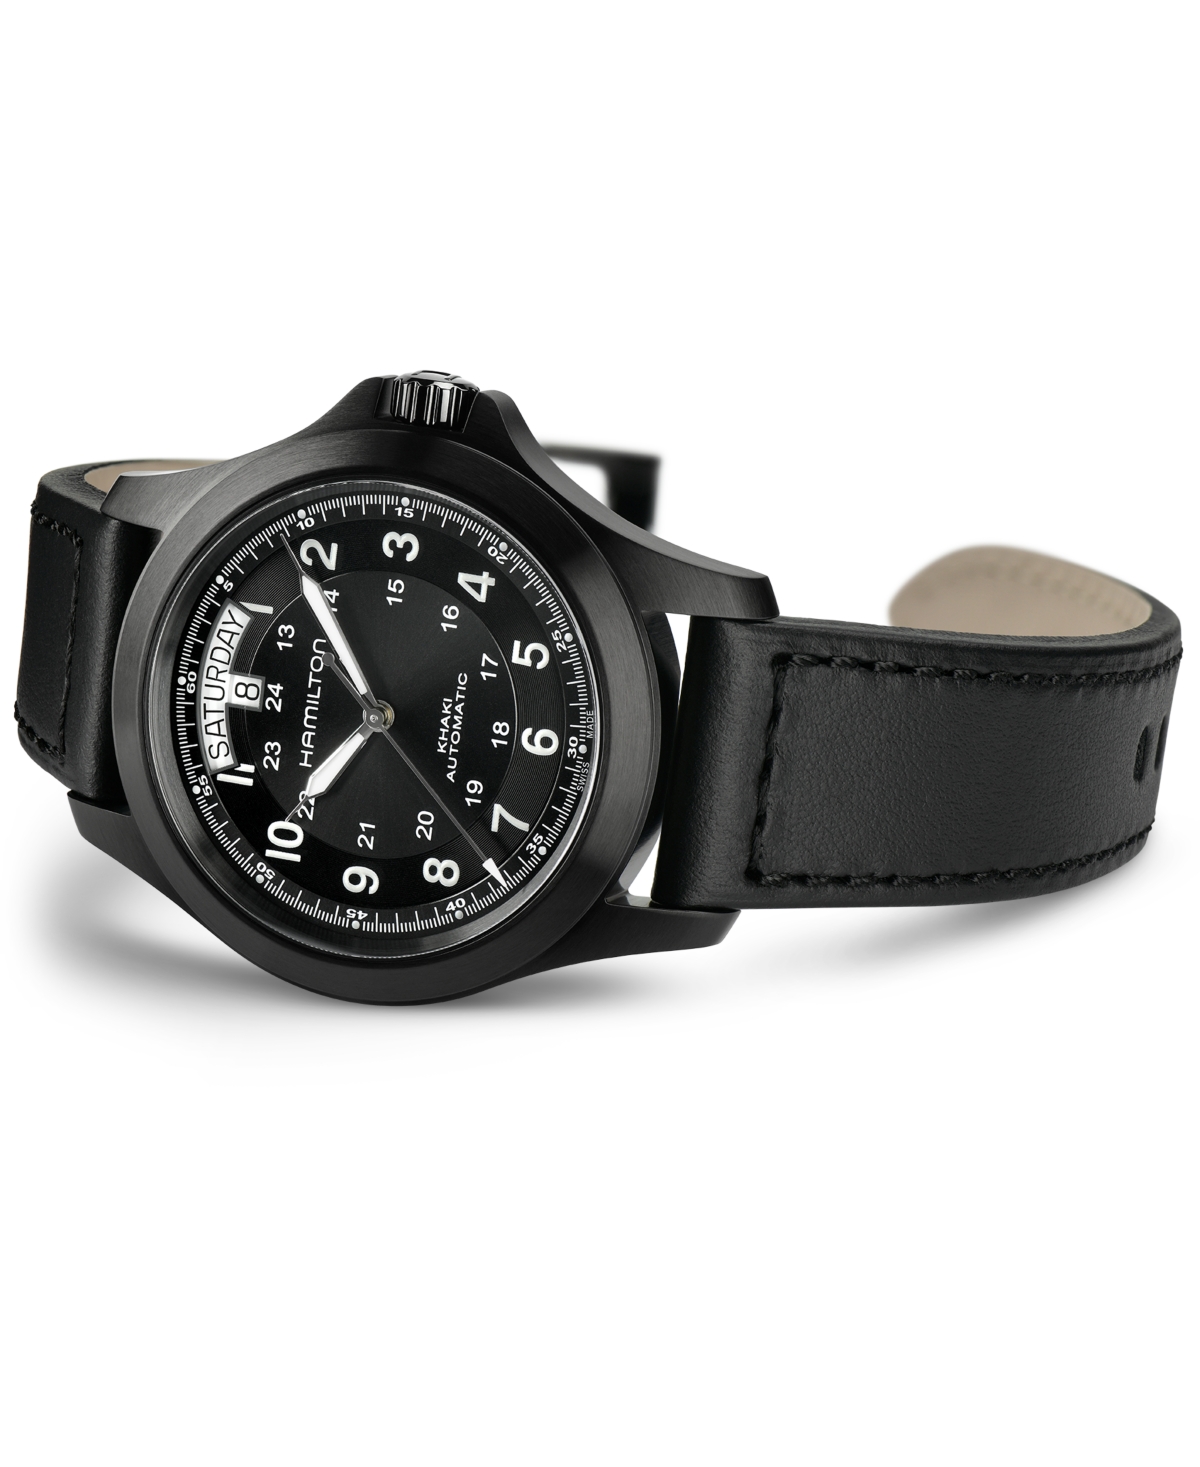 Shop Hamilton Men's Swiss Automatic Khaki Field King Black Leather Strap Watch 40mm